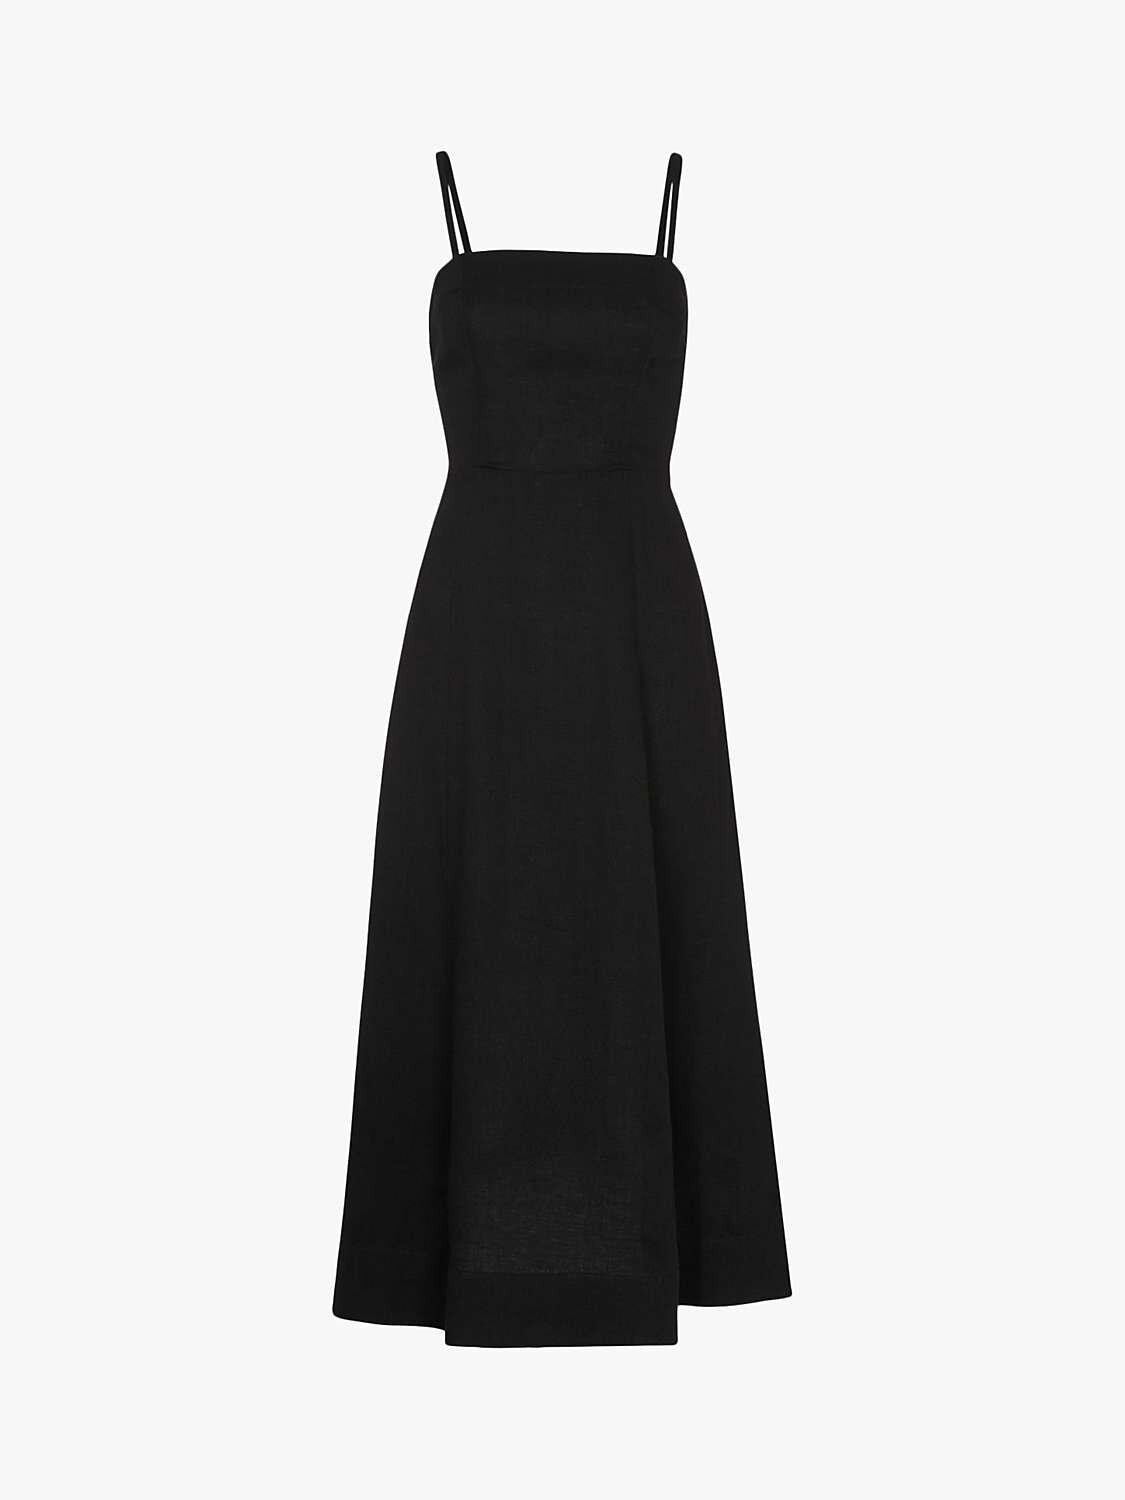 Dress, £129, Whistles